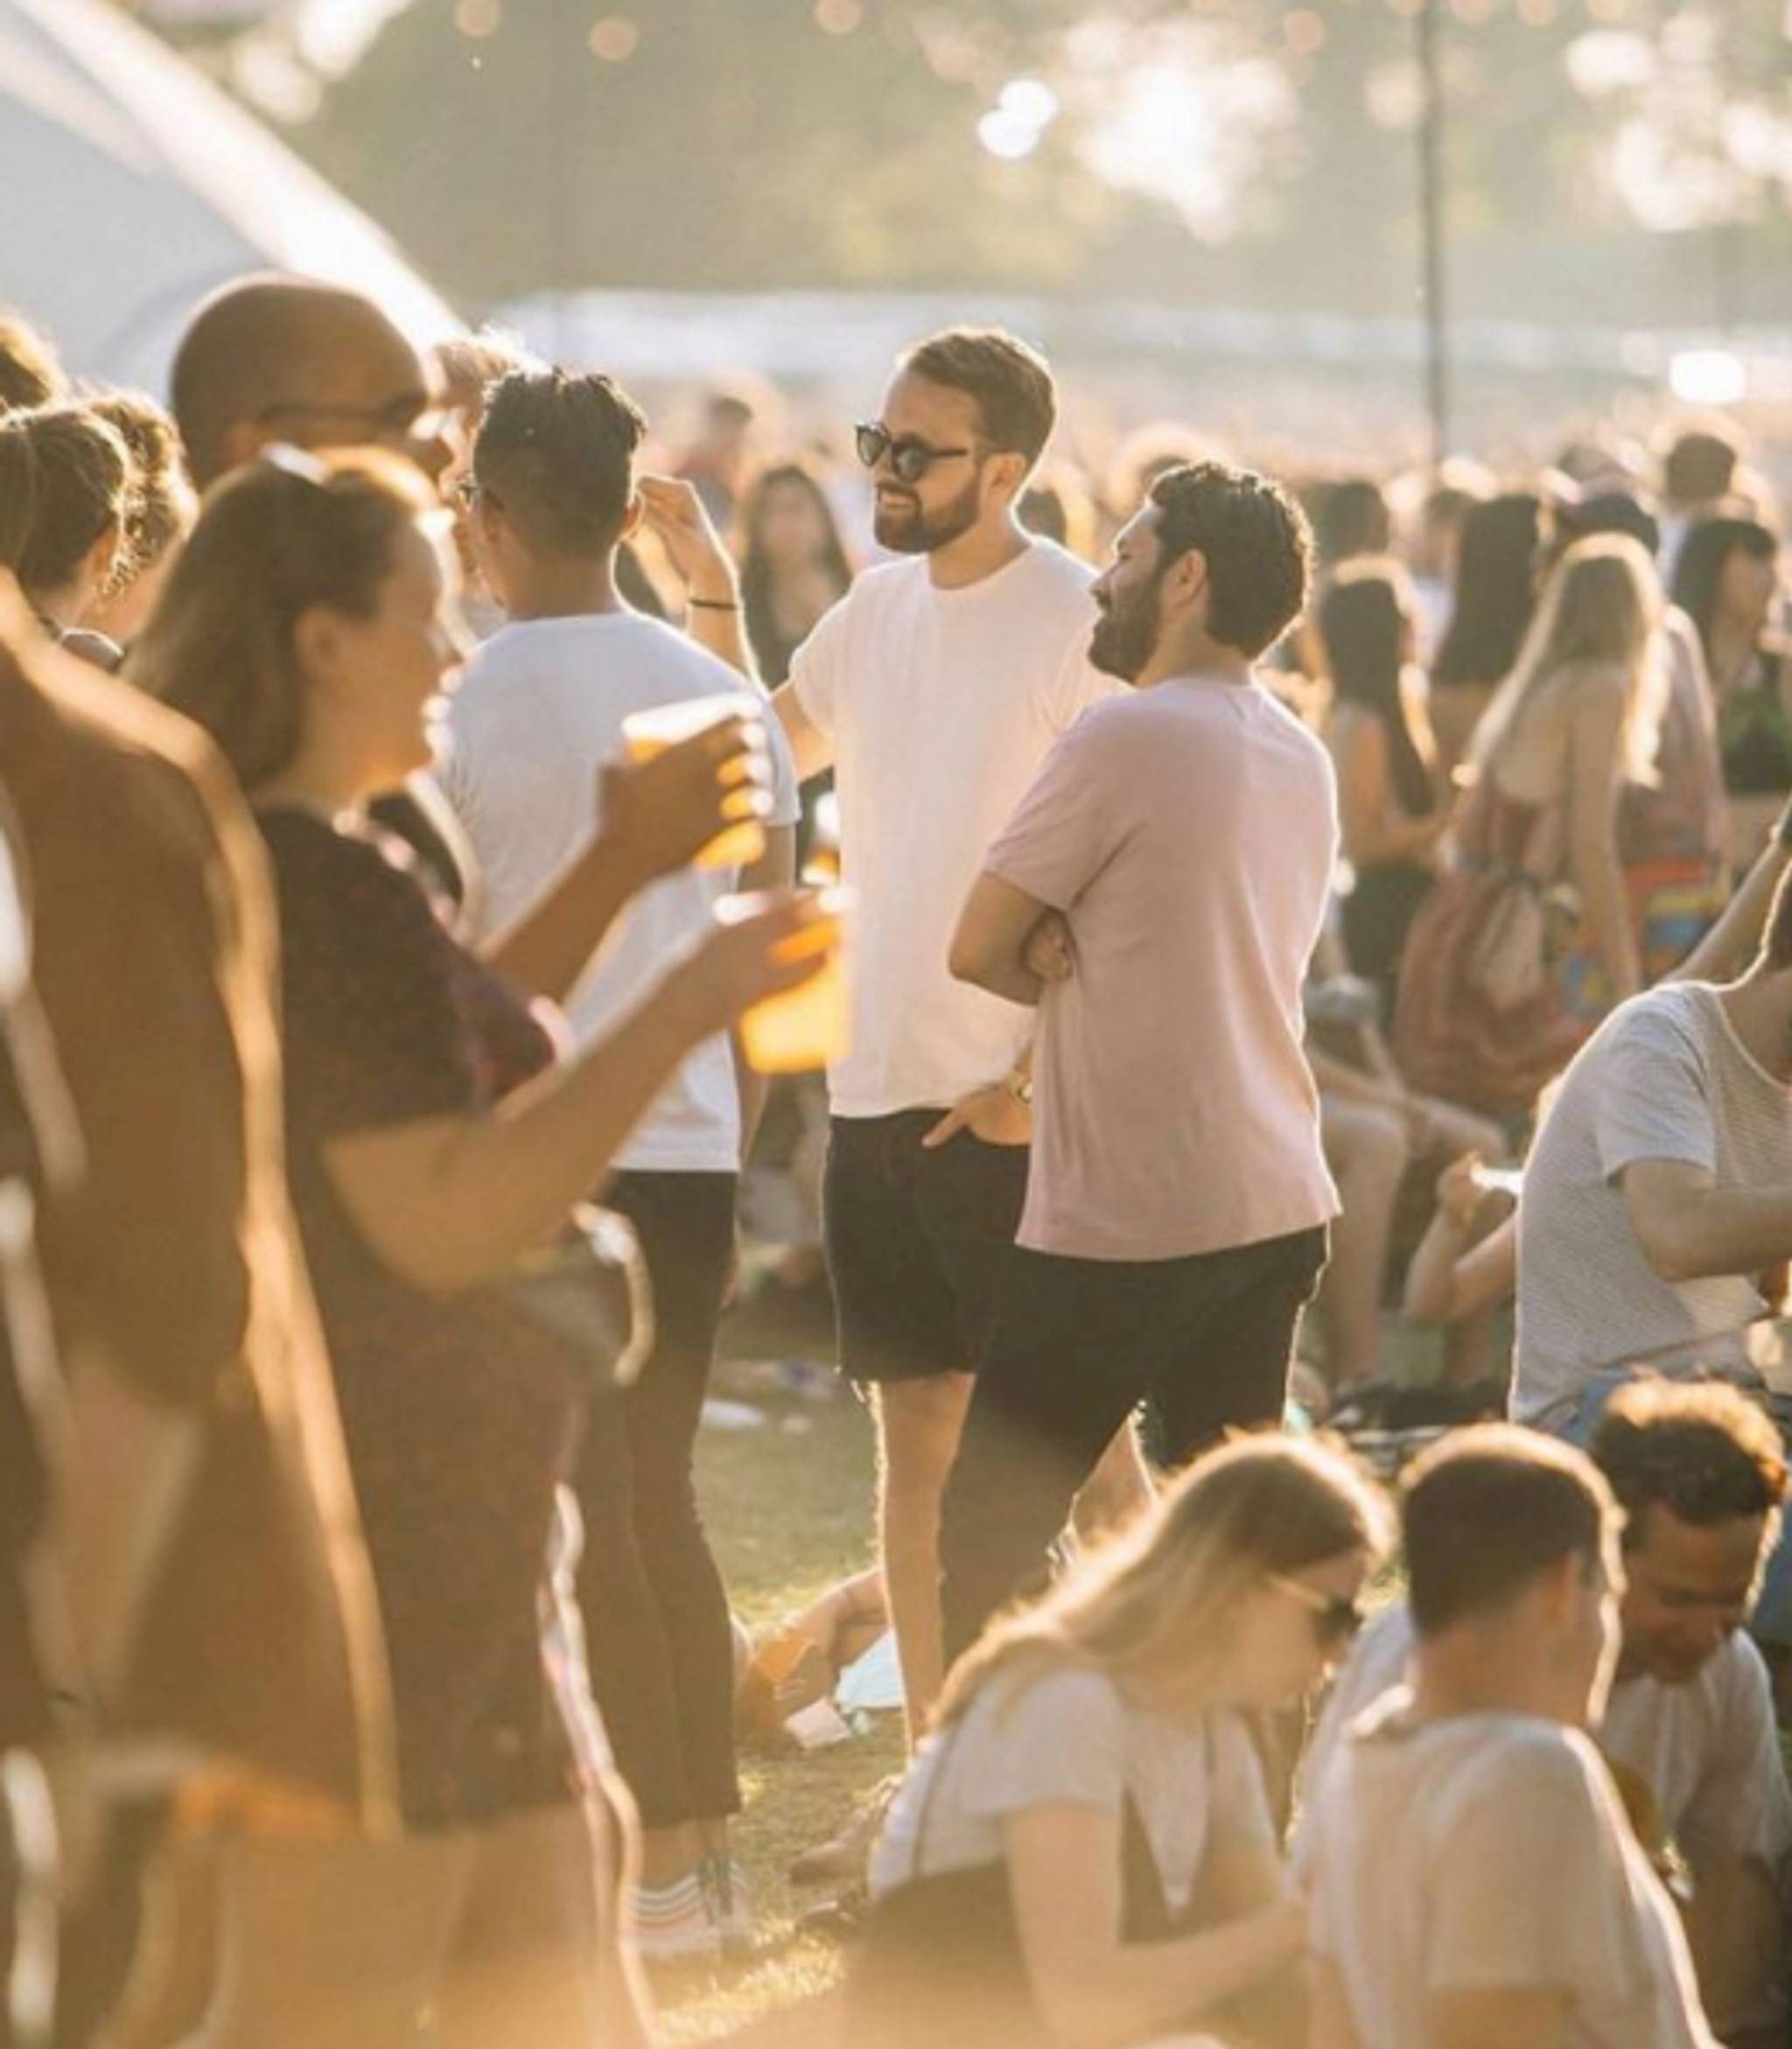 Festival ticket sales soar as Britons await freedom